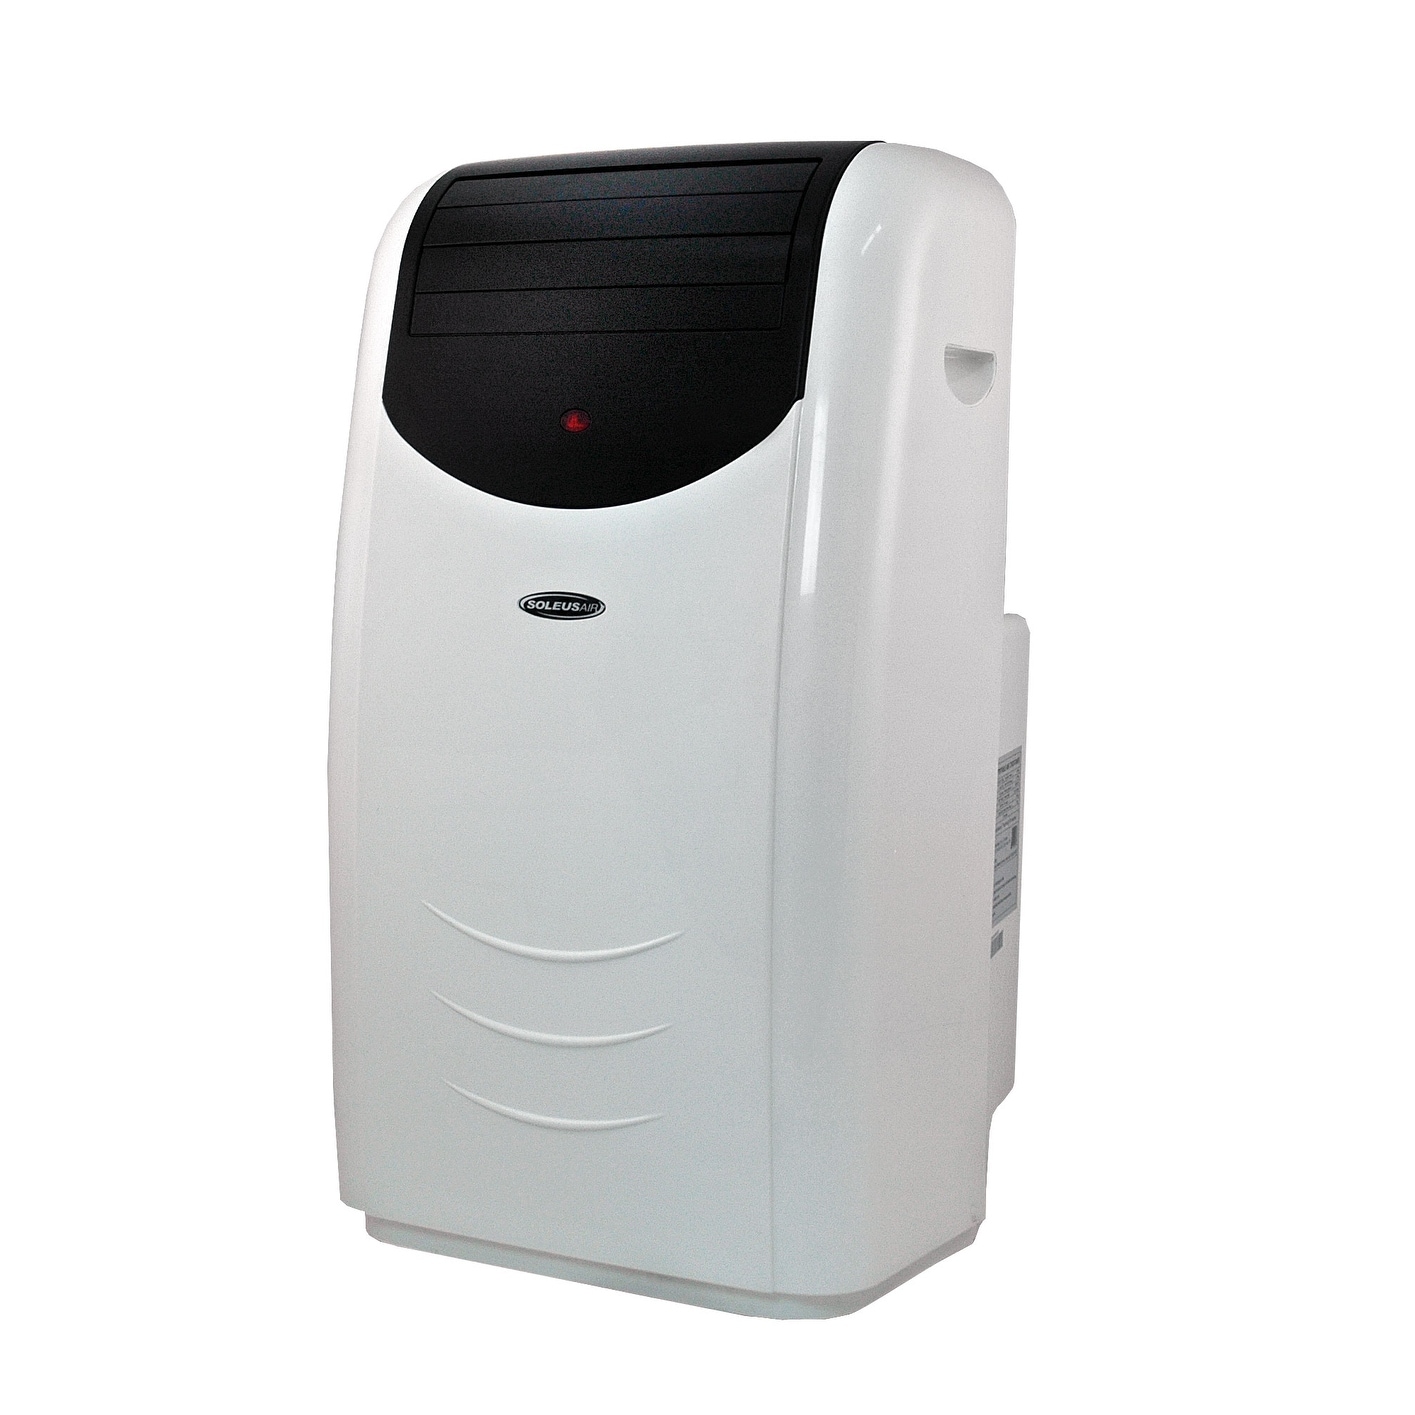 SoleusAir 14,000 BTU Portable Air Conditioner with 11,000 BTU